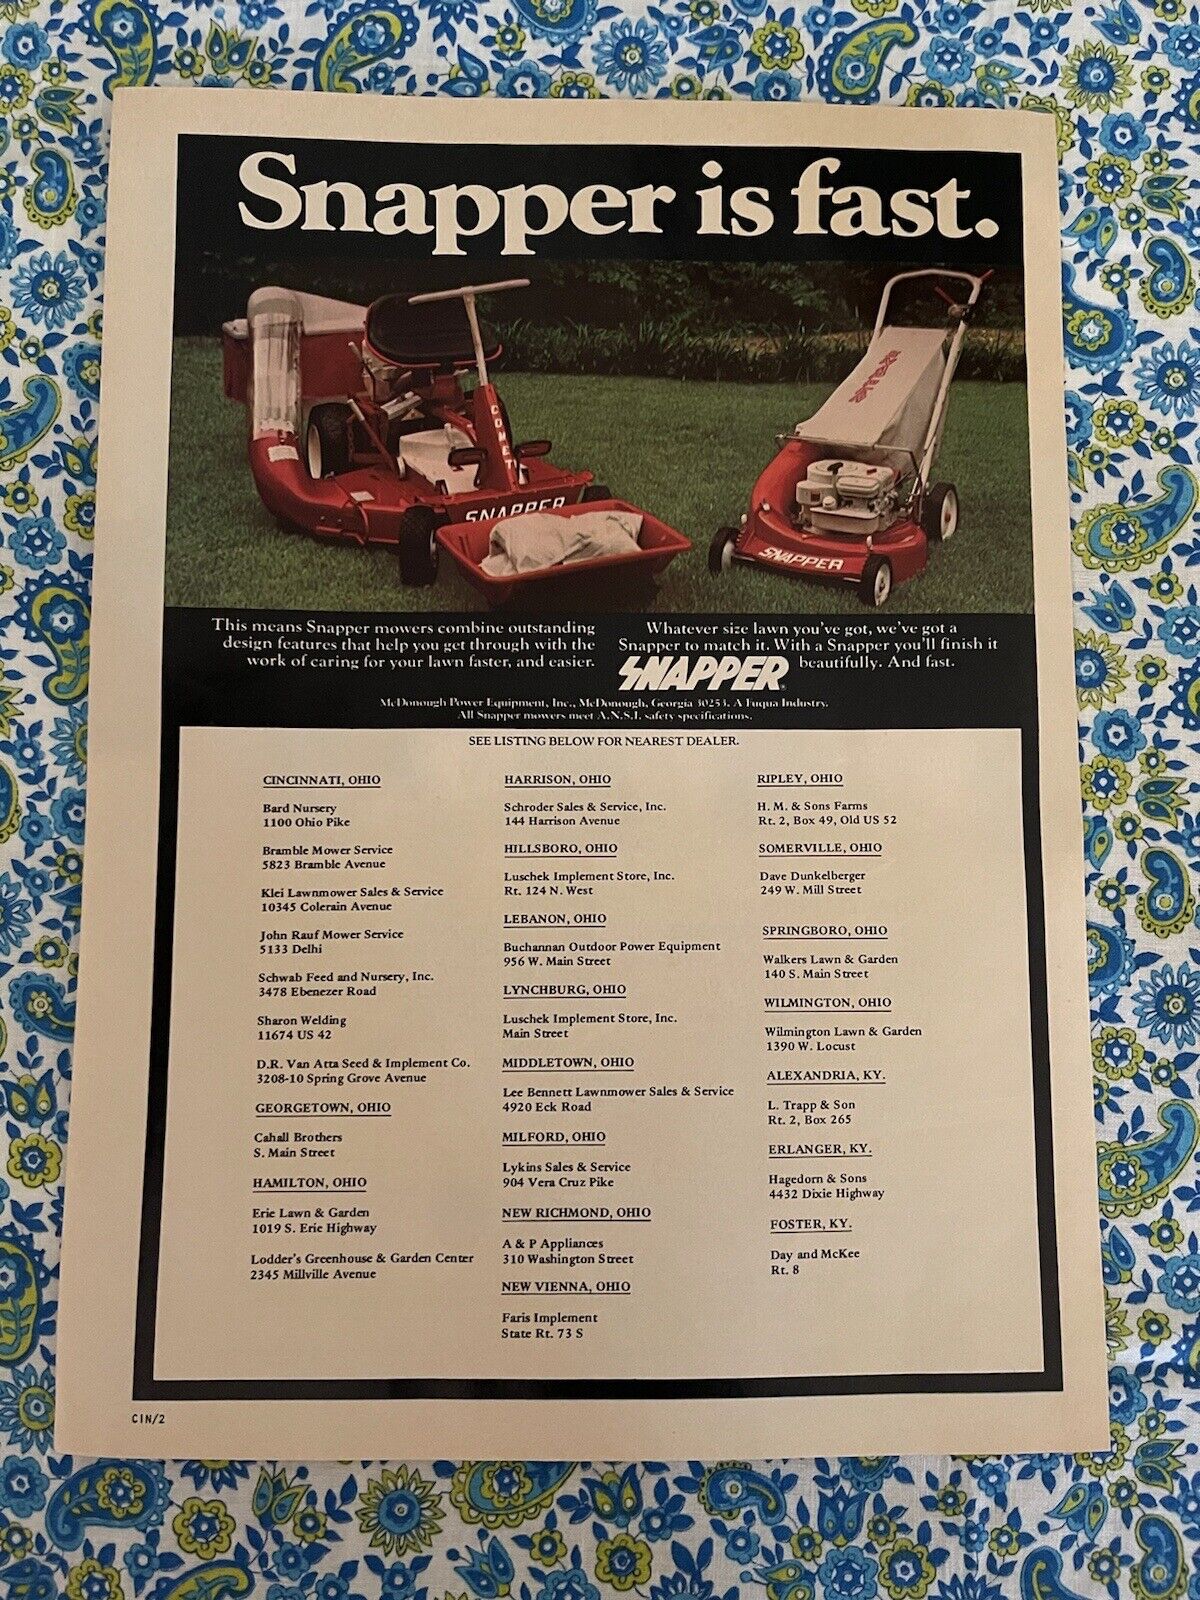 Vintage 1976 Snapper Lawn Mowers Print Ad Dealer Listings Snapper Is Fast